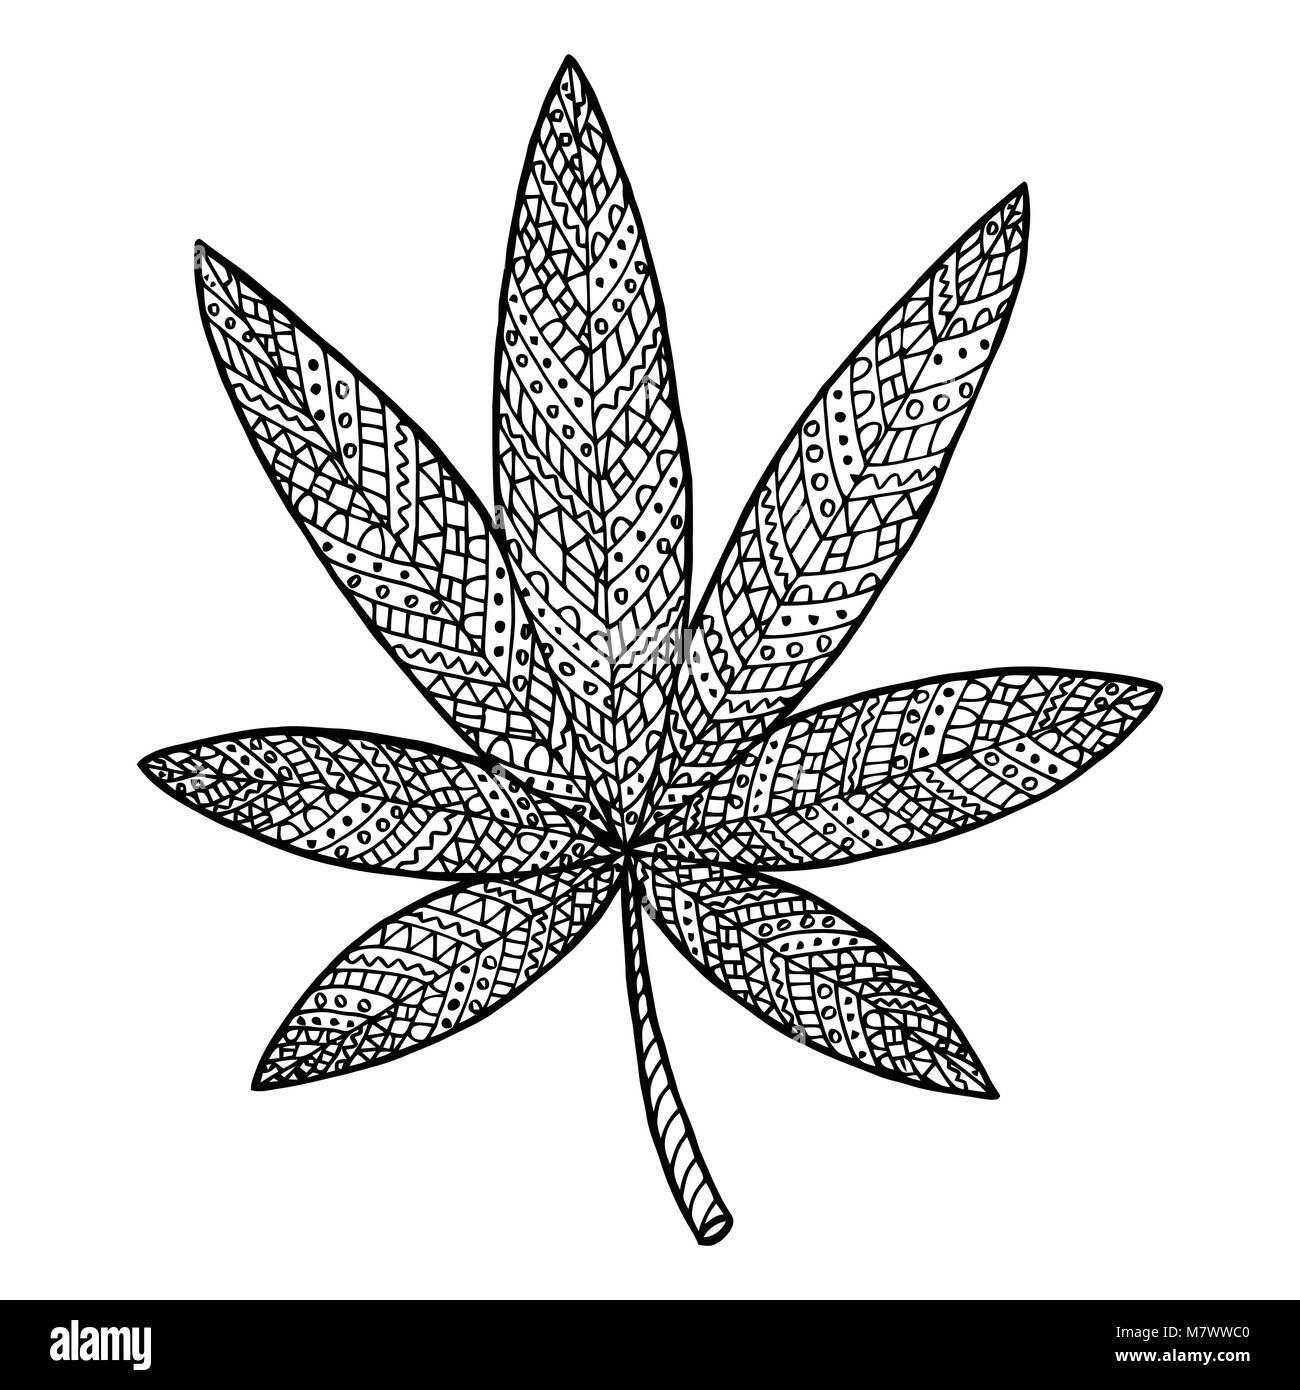 Illustration Vecteur De Cannabis Motif De La Filandre Et